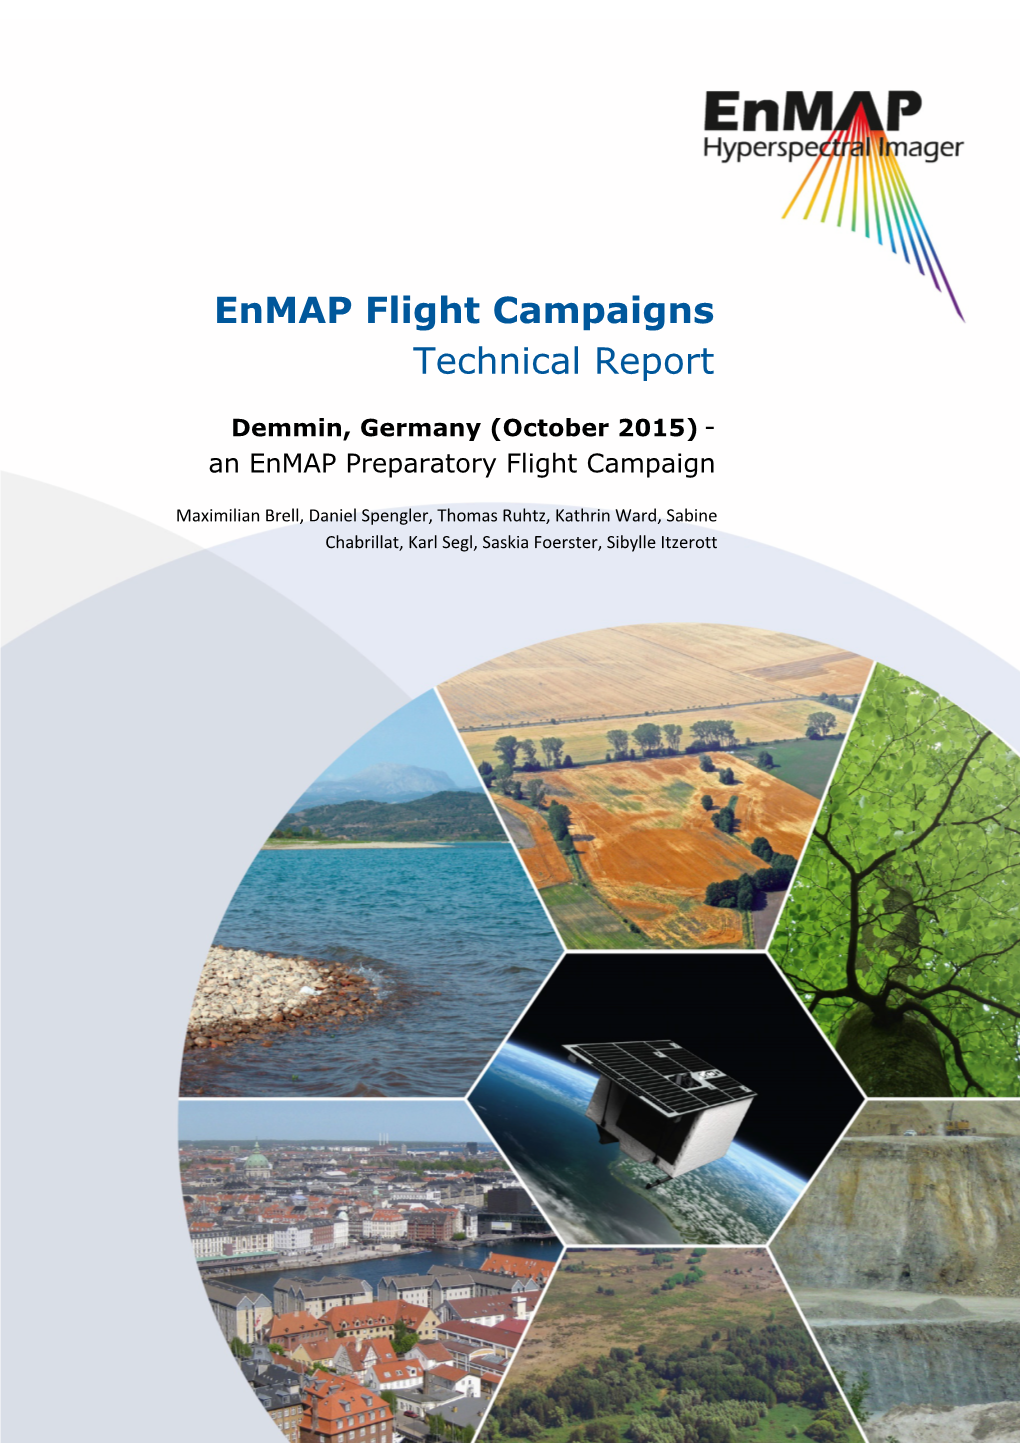 Demmin, Germany (October 2015) - an Enmap Preparatory Flight Campaign